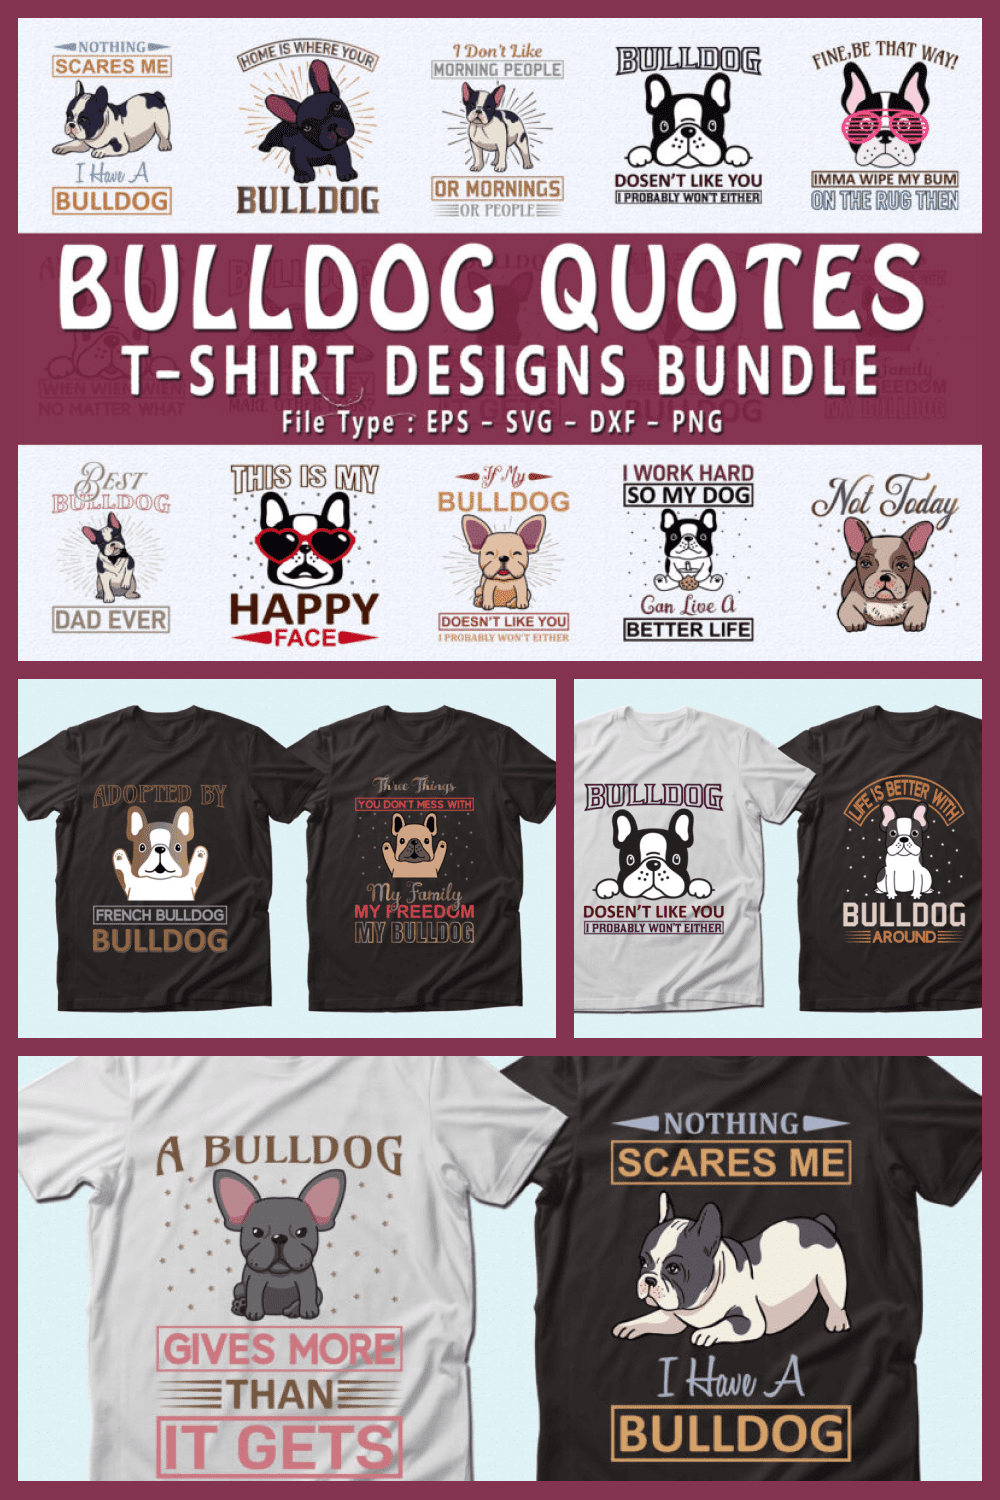 Trendy 20 Bulldog Quotes T-shirt Designs Bundle - MasterBundles - Pinterest Collage Image.